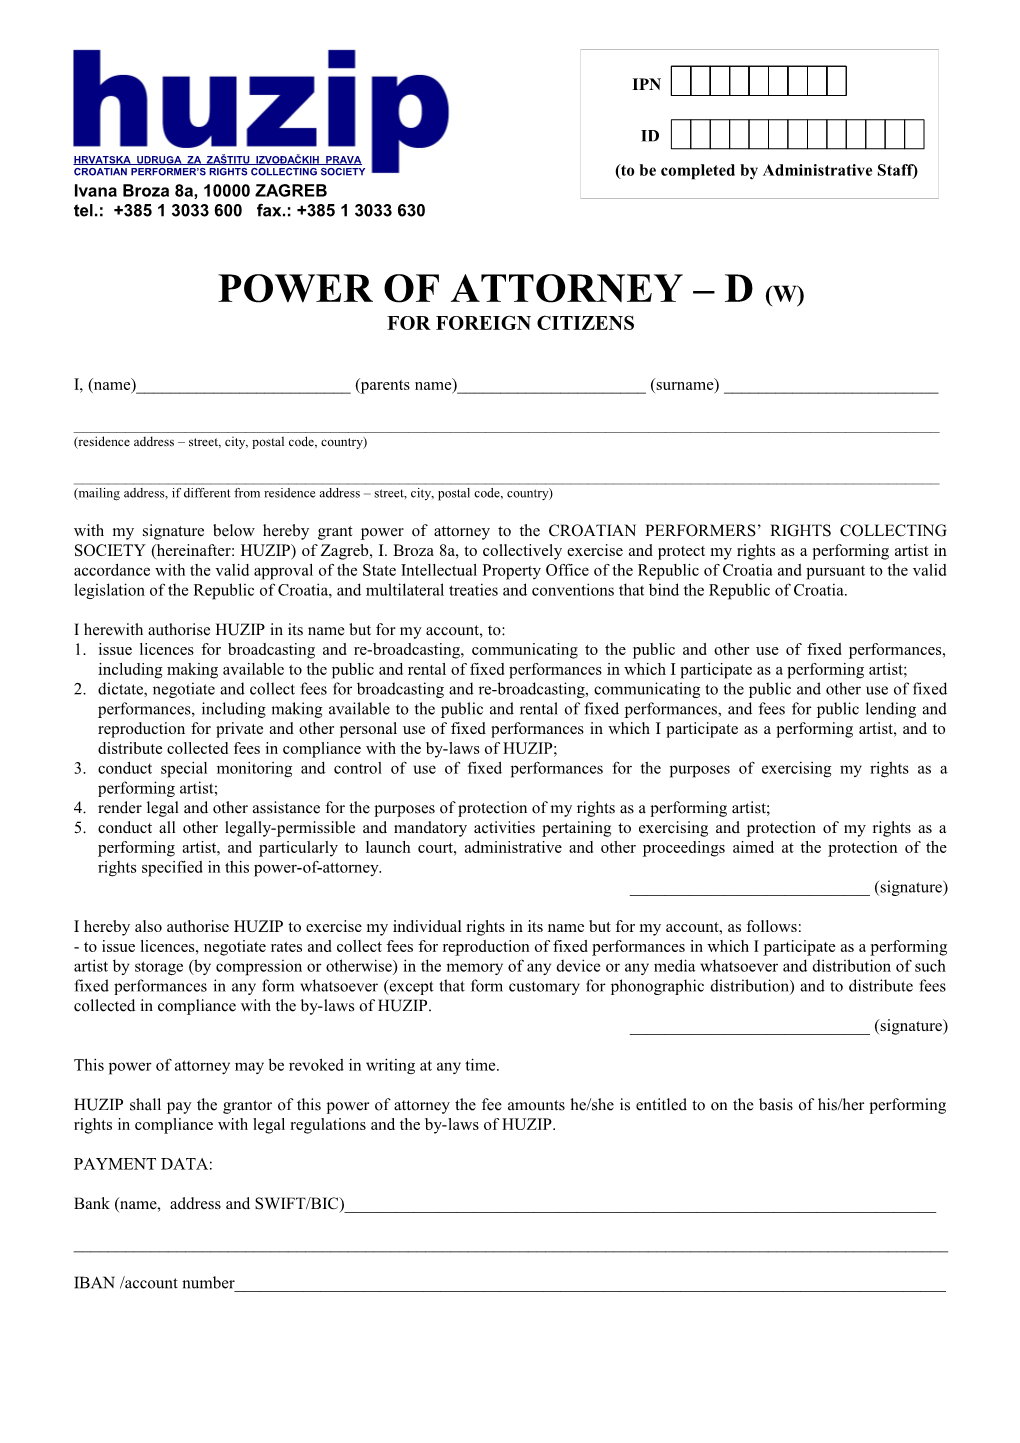 Power of Attorney D (W)